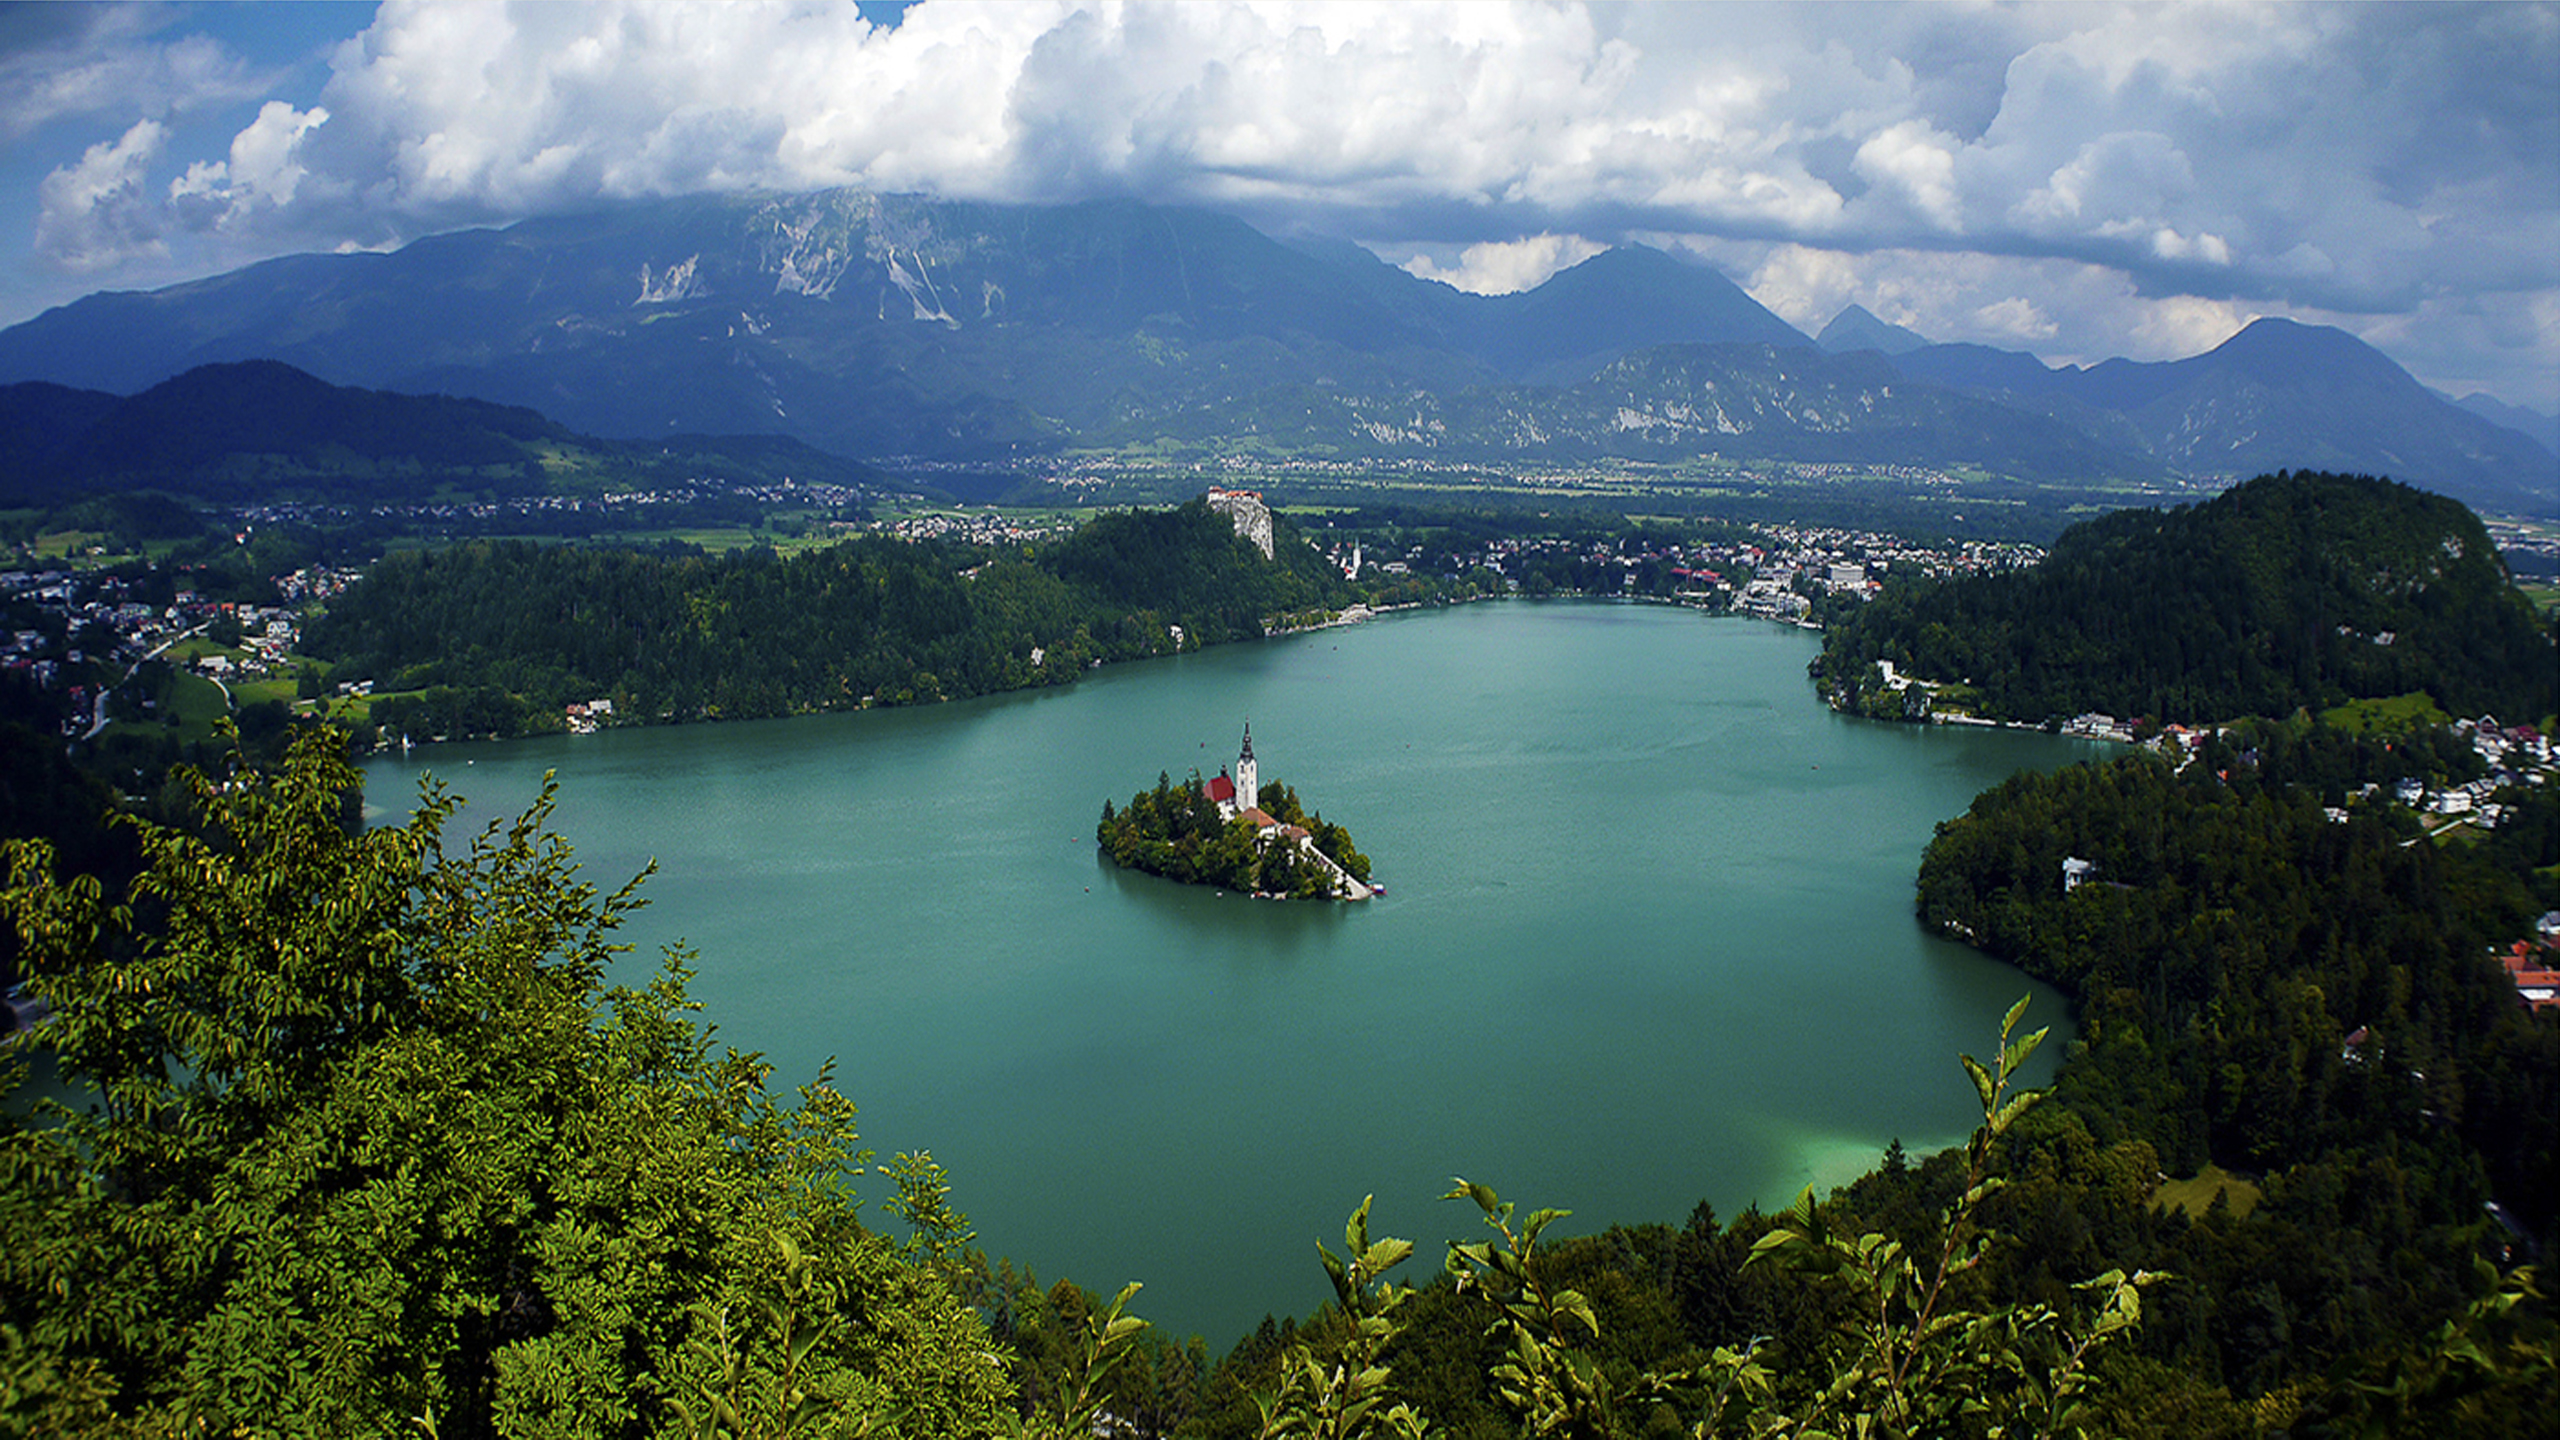 http://www.wallpapers13.com/wp-content/uploads/2015/12/Beautiful-landscape-Lake-Bled-Slovenia-Wallpaper-Hd.jpg